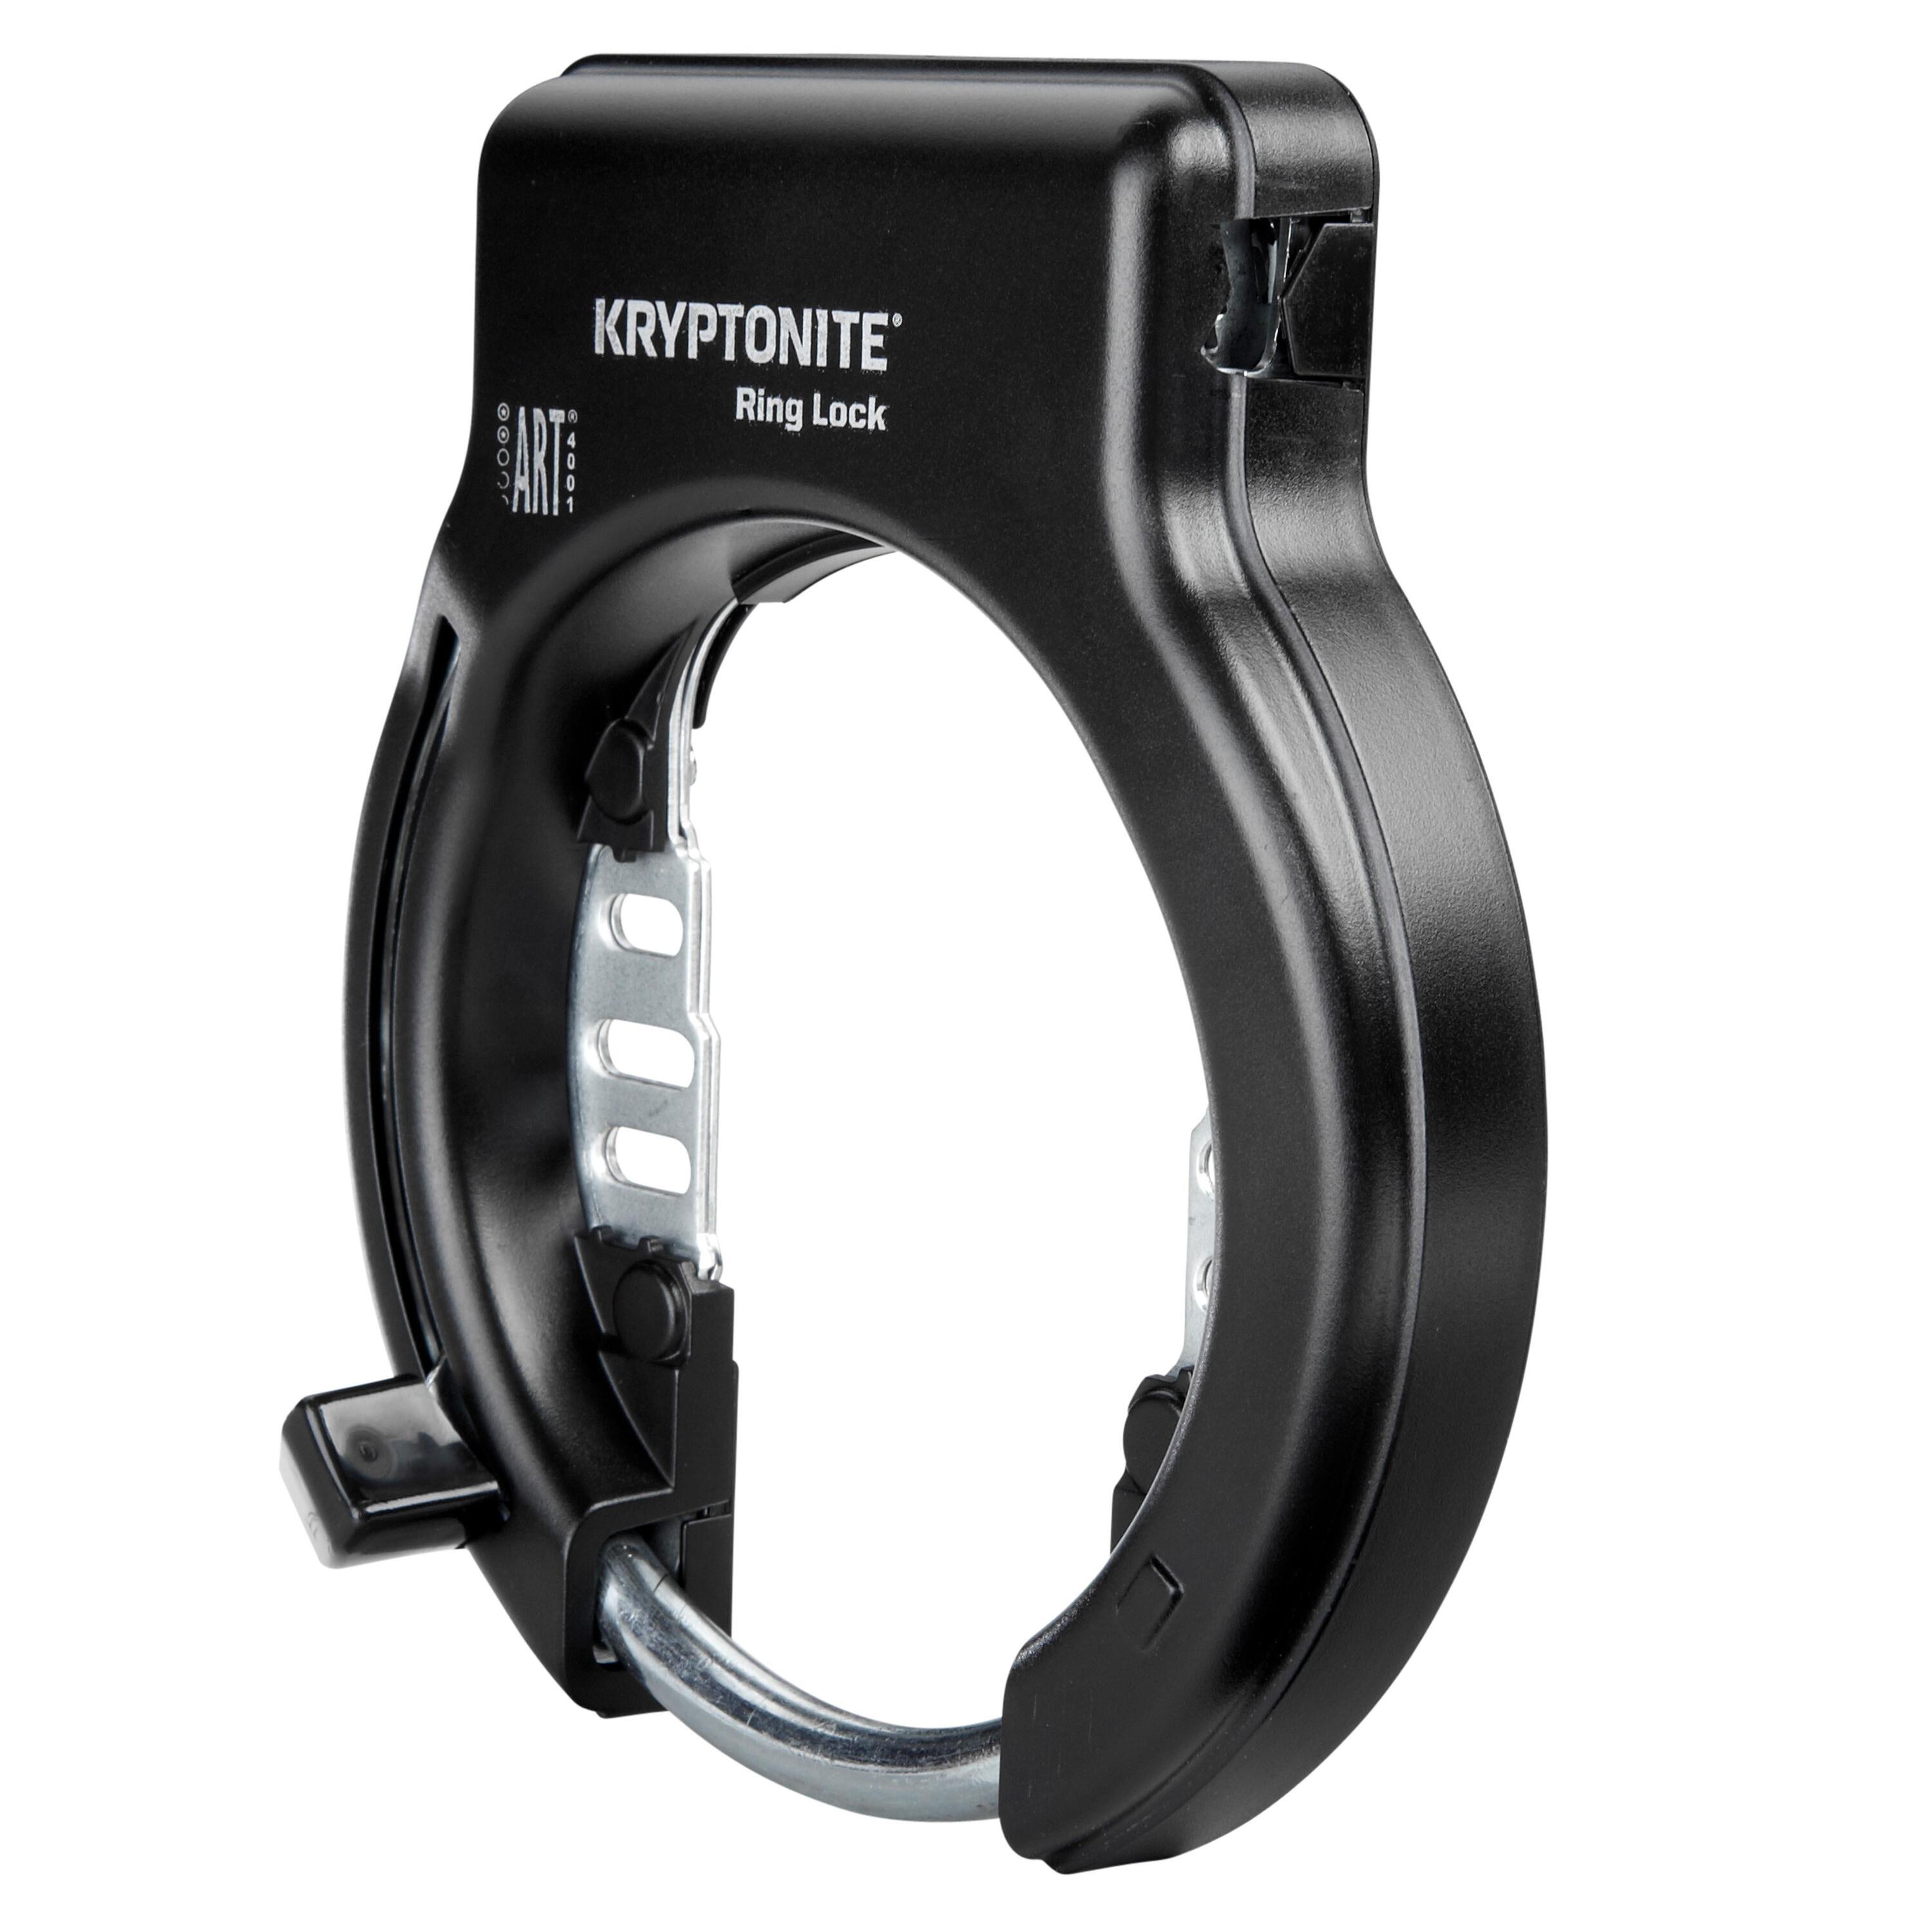 Kryptonite Ring Lock with plug in capability - Non Retractable 2/5